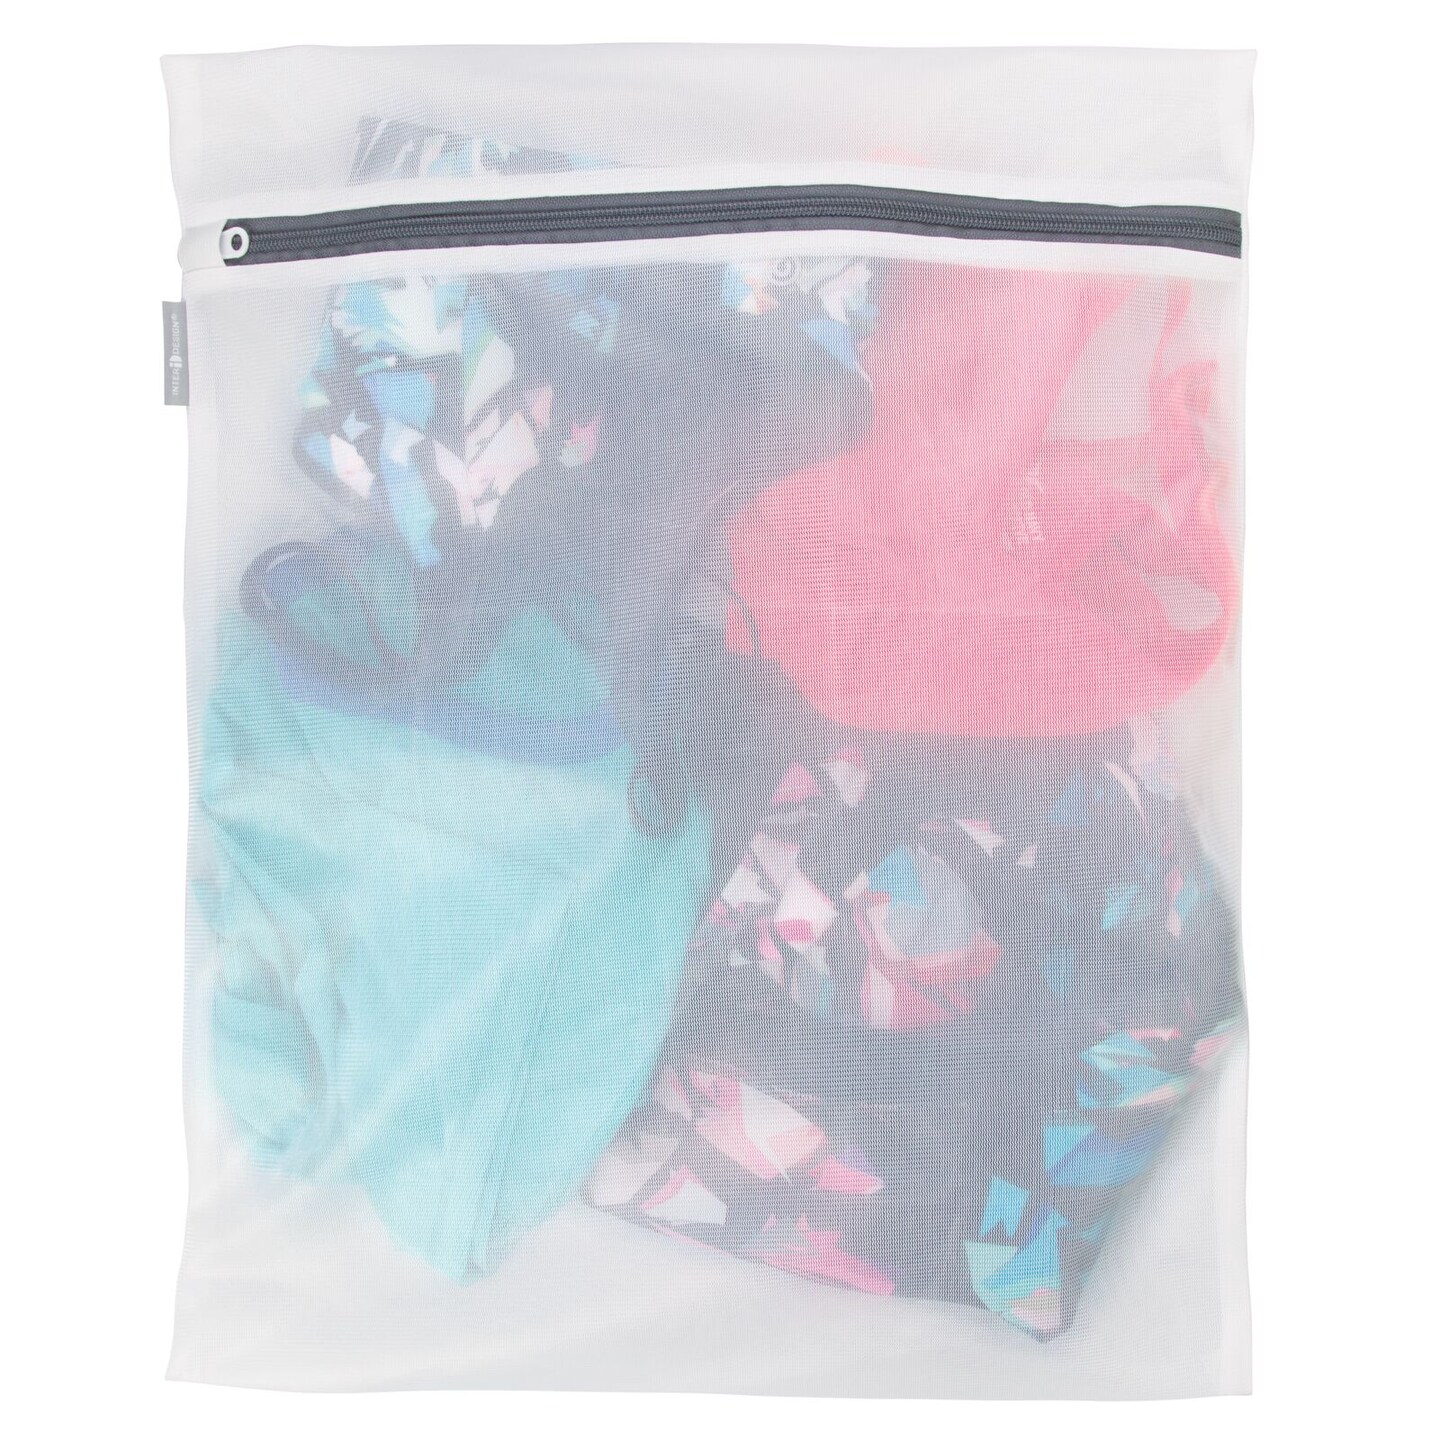 mDesign Laundry Mesh Fabric Wash Bag, Zipper Closure